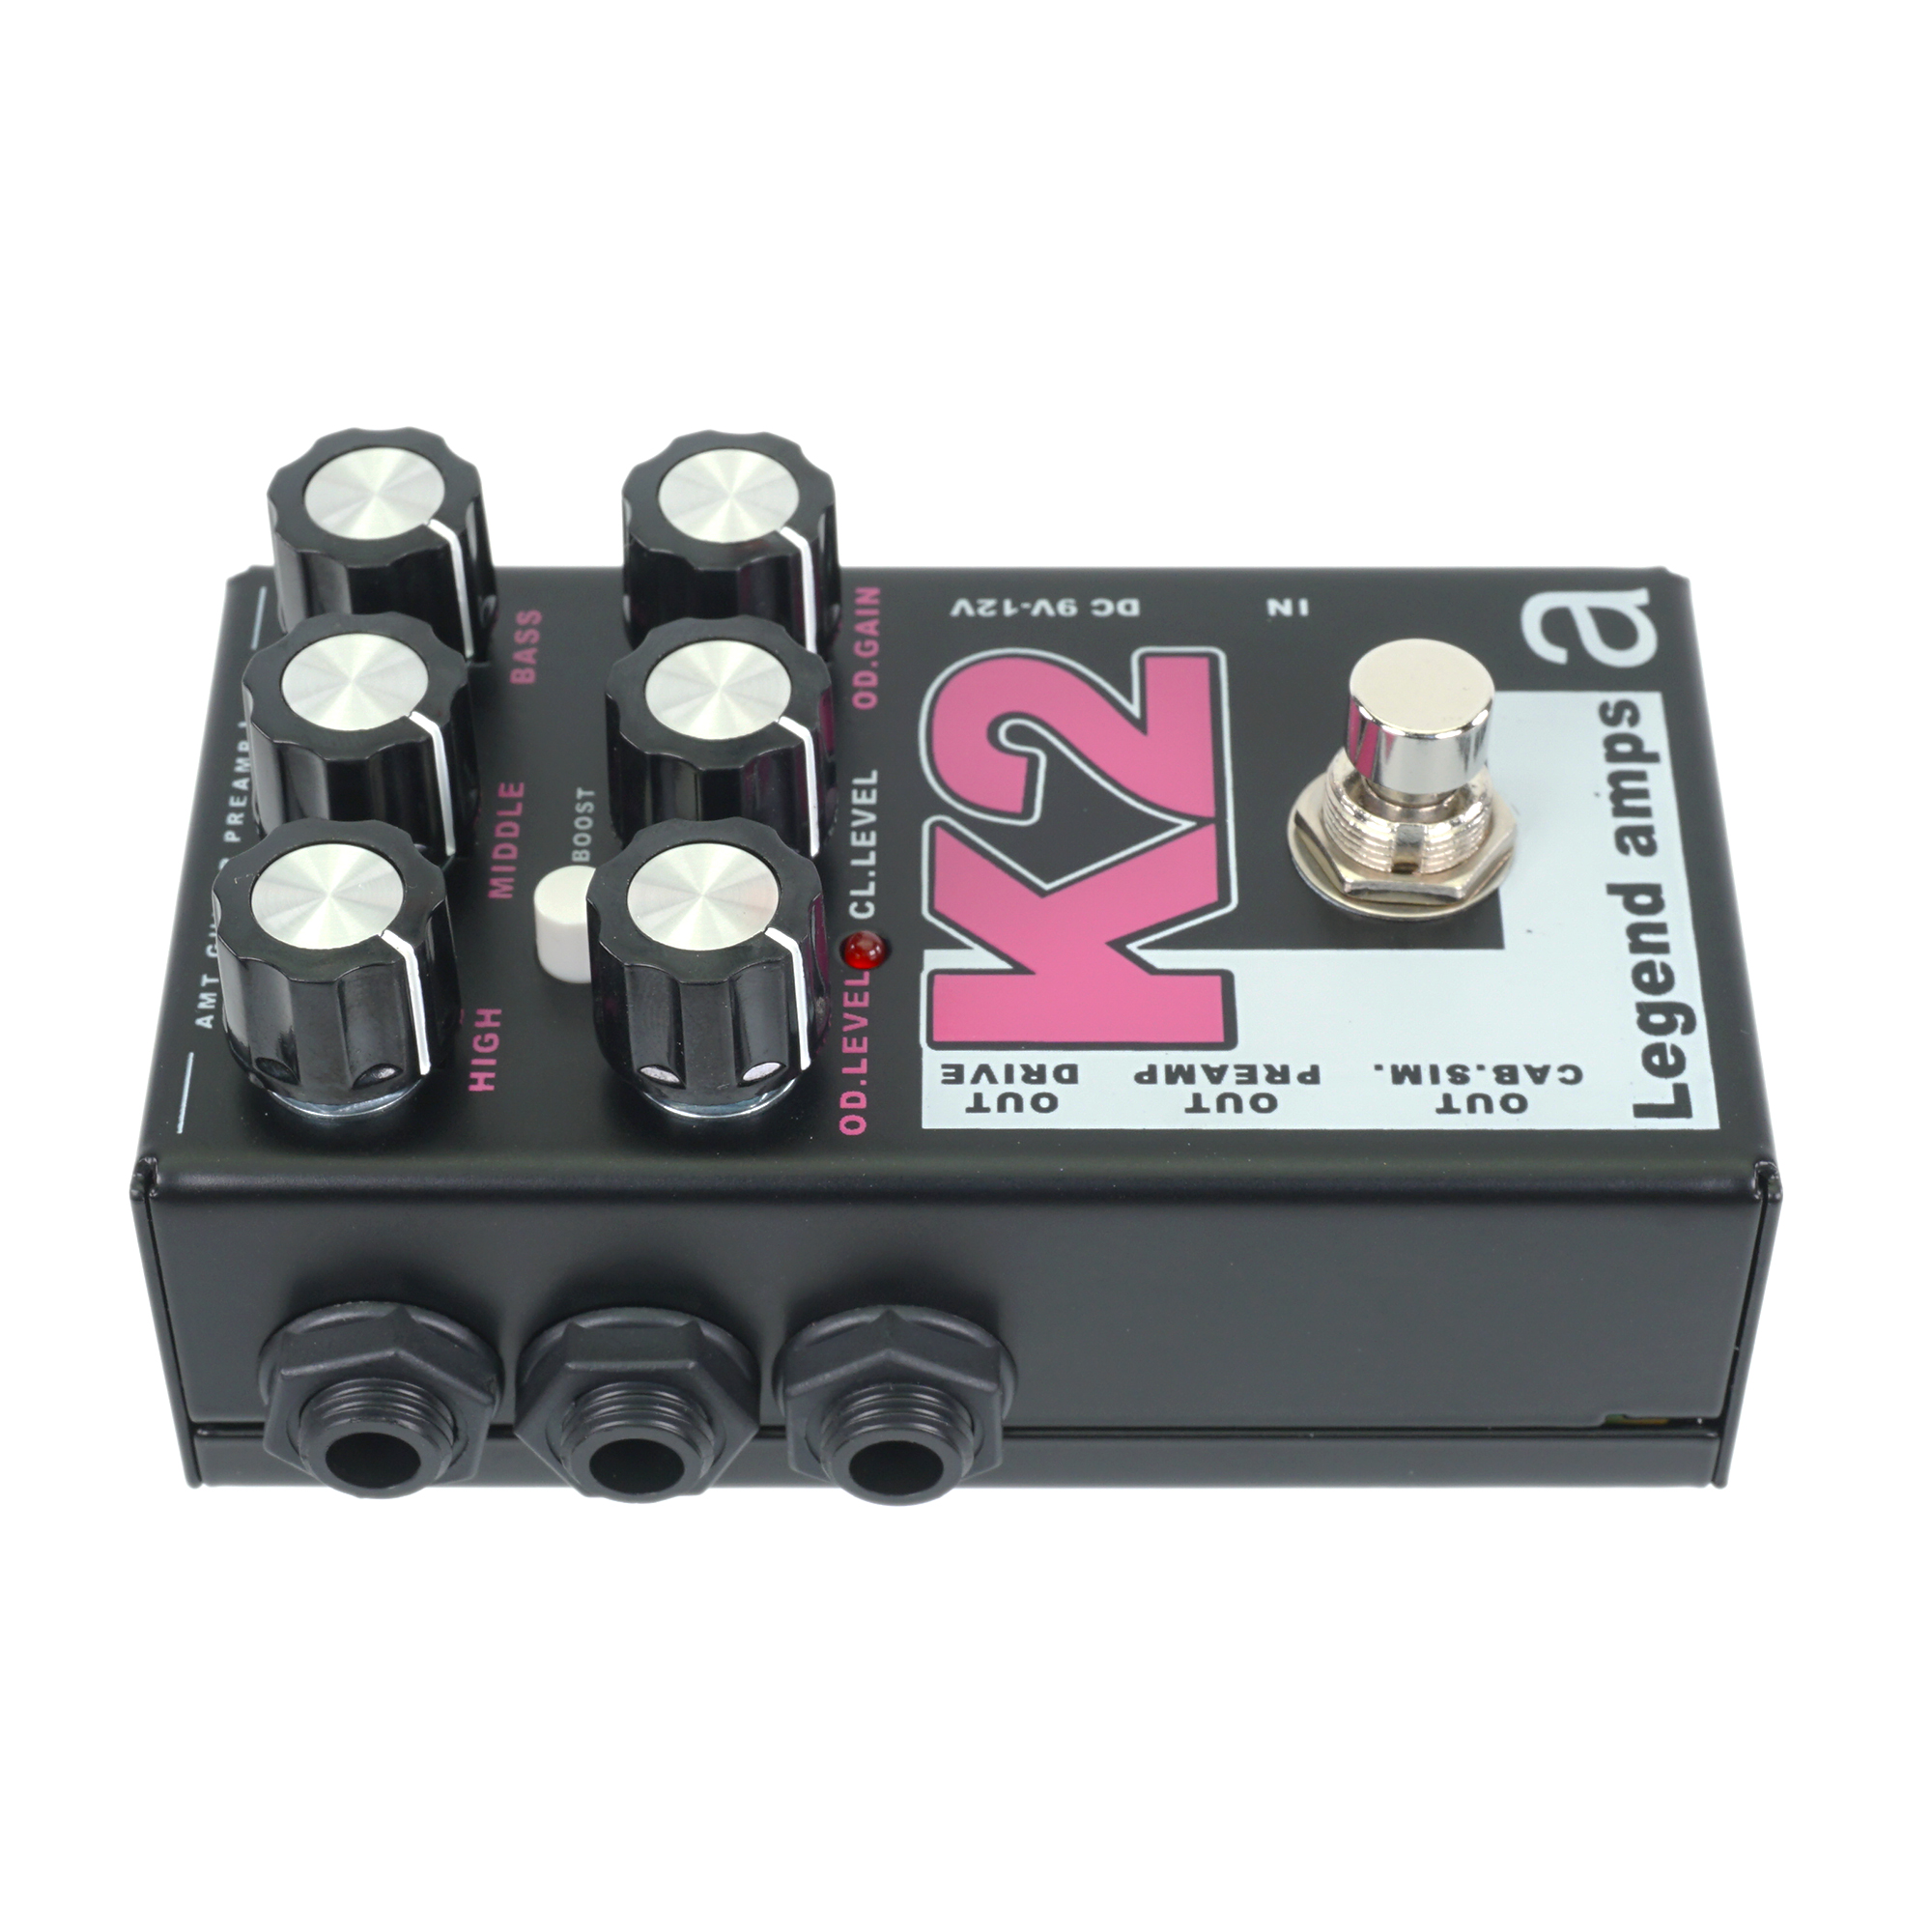 AMT K2 - 2 channels guitar preamp/distortion pedal (Krank)